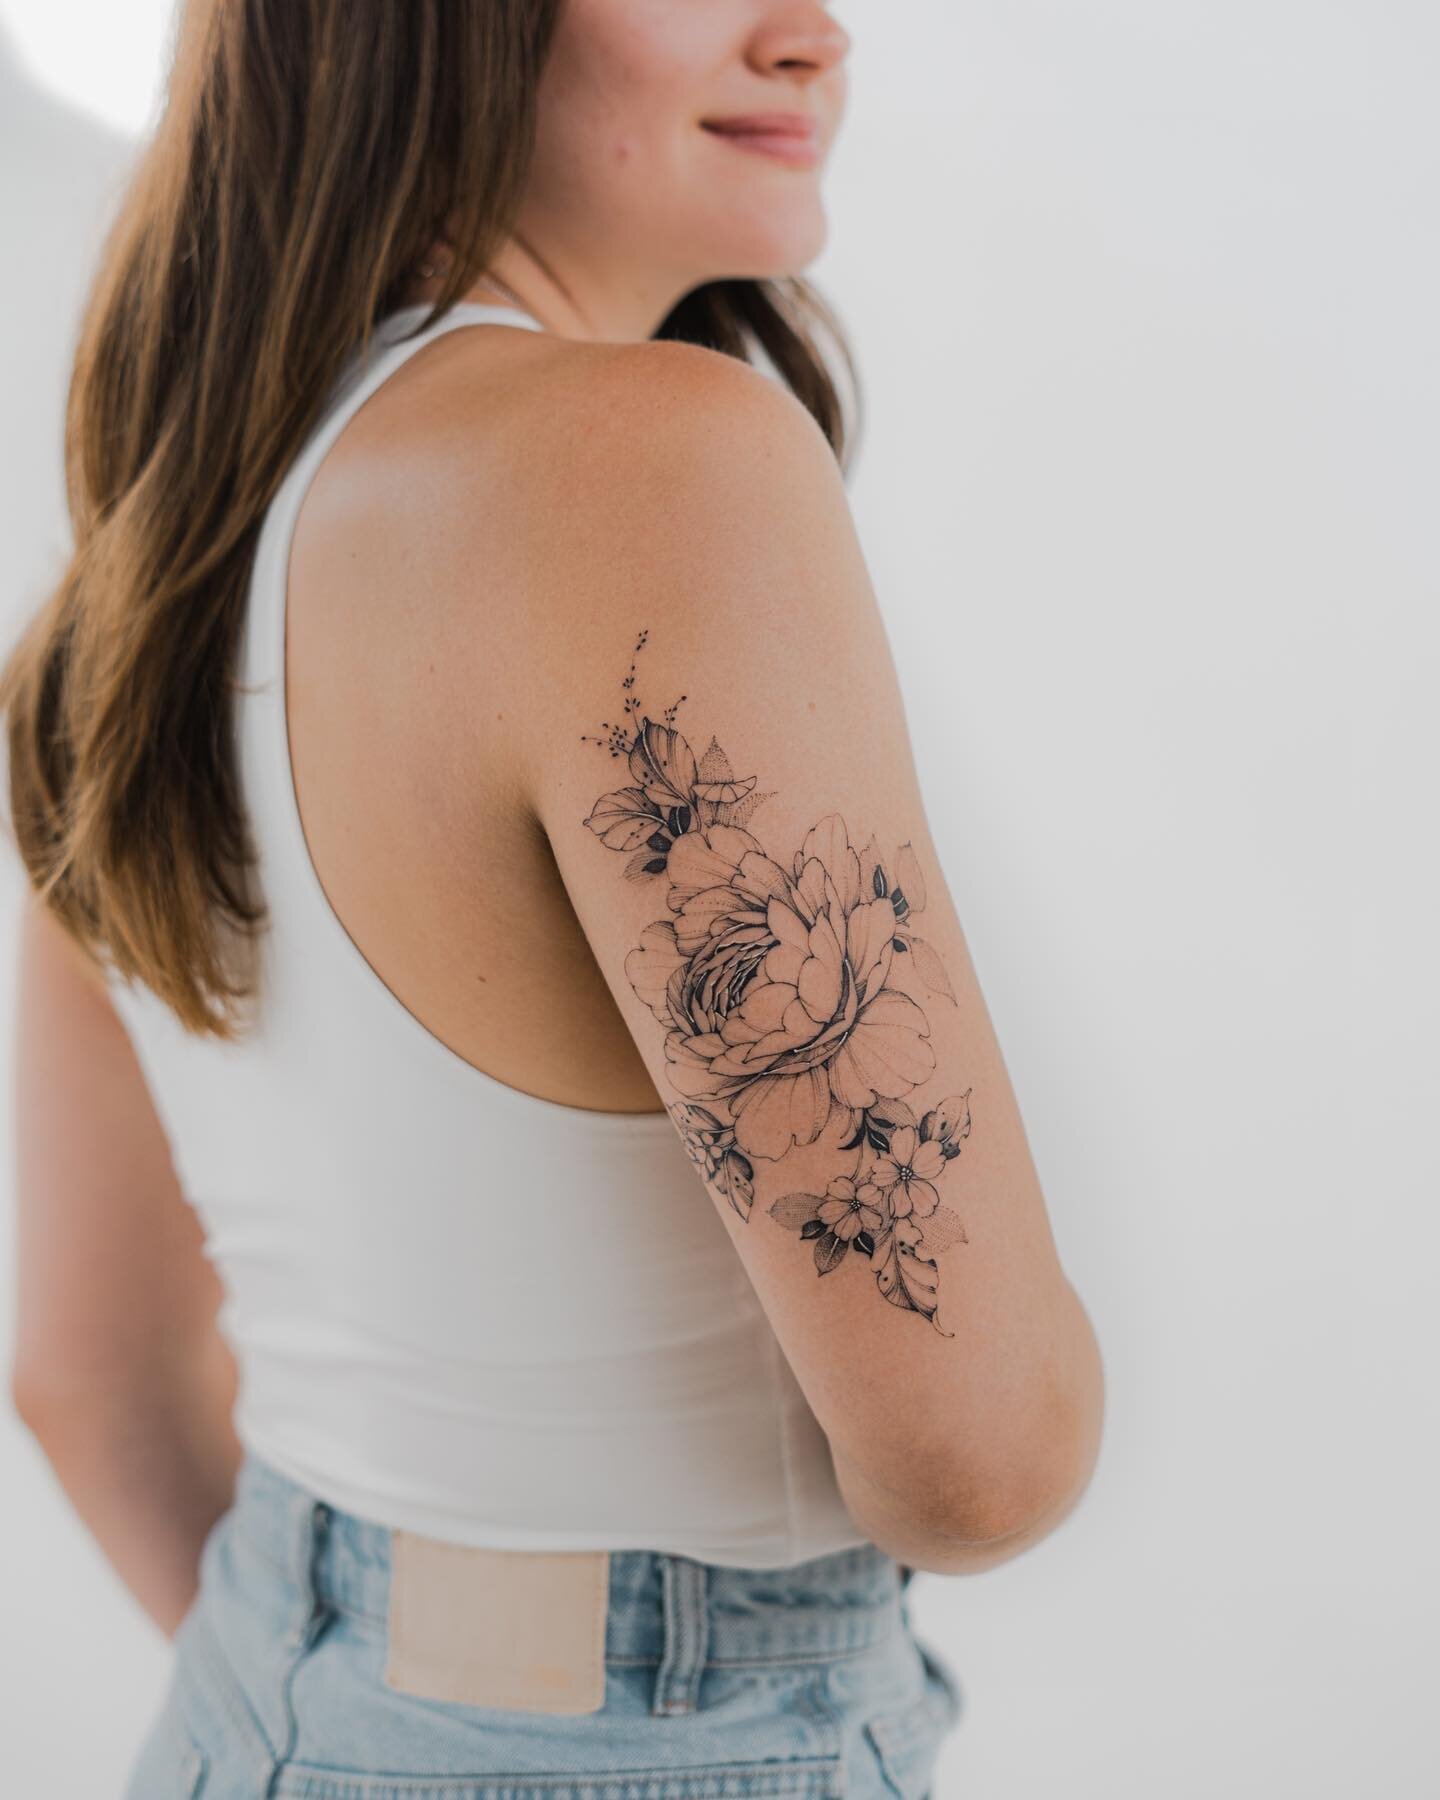 Tricep piece for Lily. Thank you 🙏🏼 
.
.
.
.

 #tattoo #tattoos #finelinetattoos #frehandtattoo #tattoartist #finelinetattoo #fineline #torontotattoo #torontotattoos #torontotattooartist #floral #floraltattoos #flower tattoo #montrealtattoo #peony 